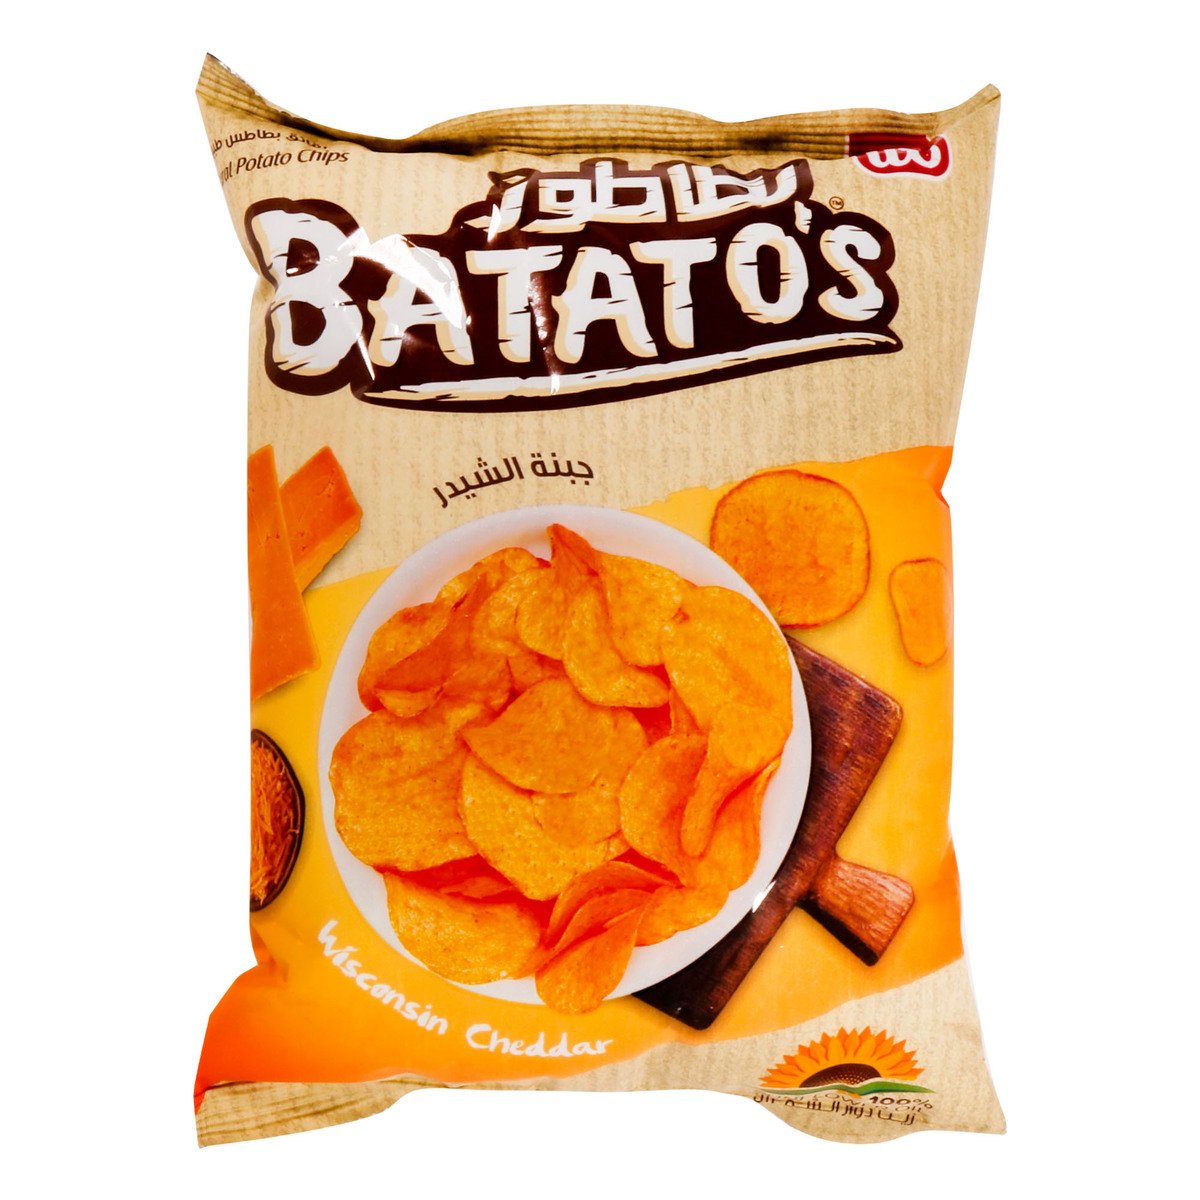 Batato's Wisconsin Cheddar Chips 30g